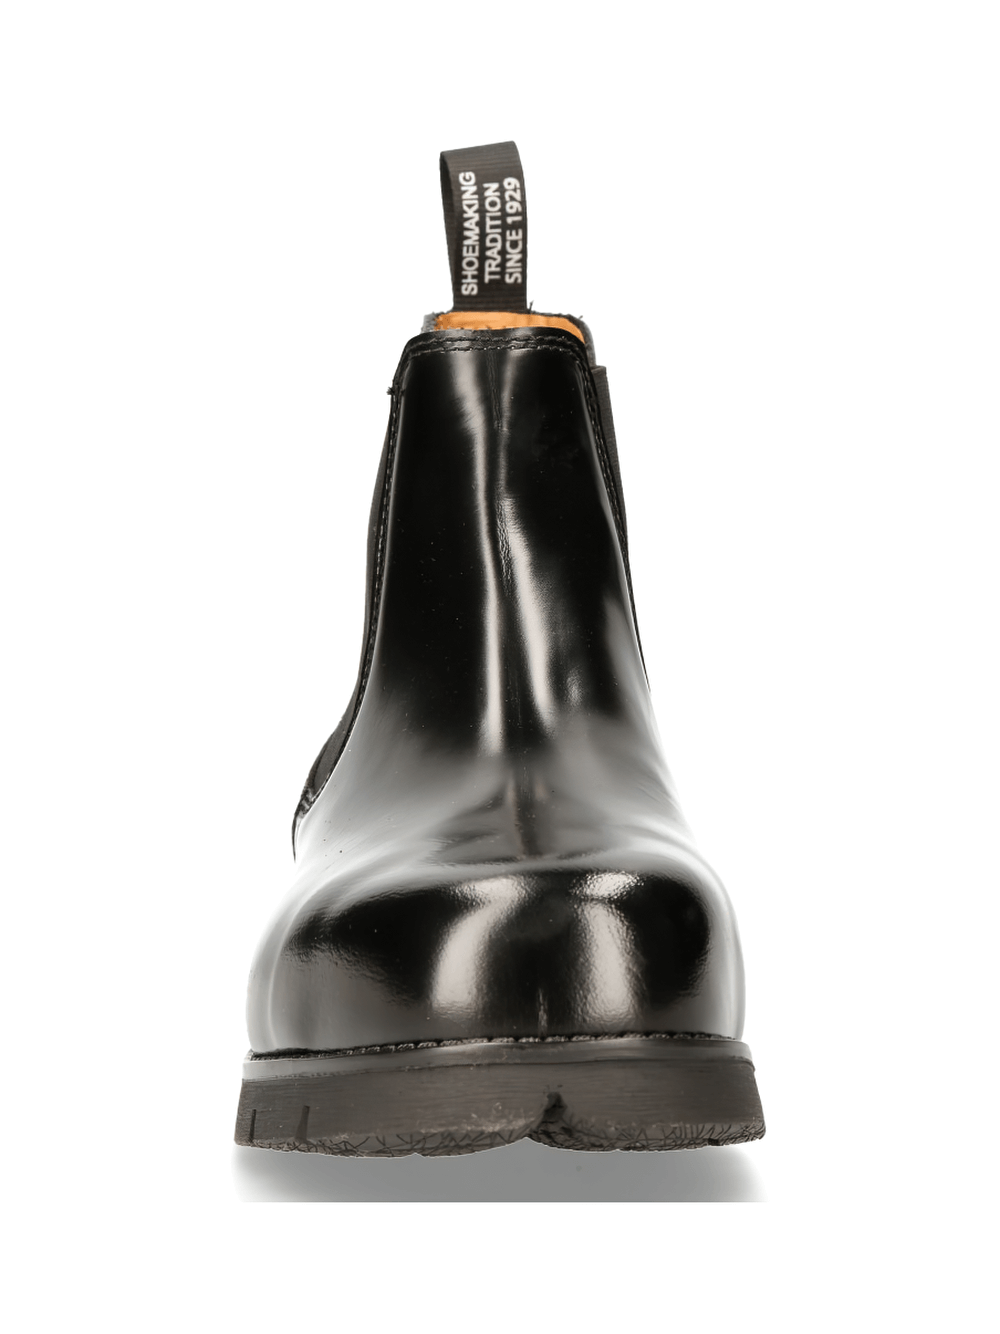 NEW ROCK Elegantes botines militares negros con puntera de acero